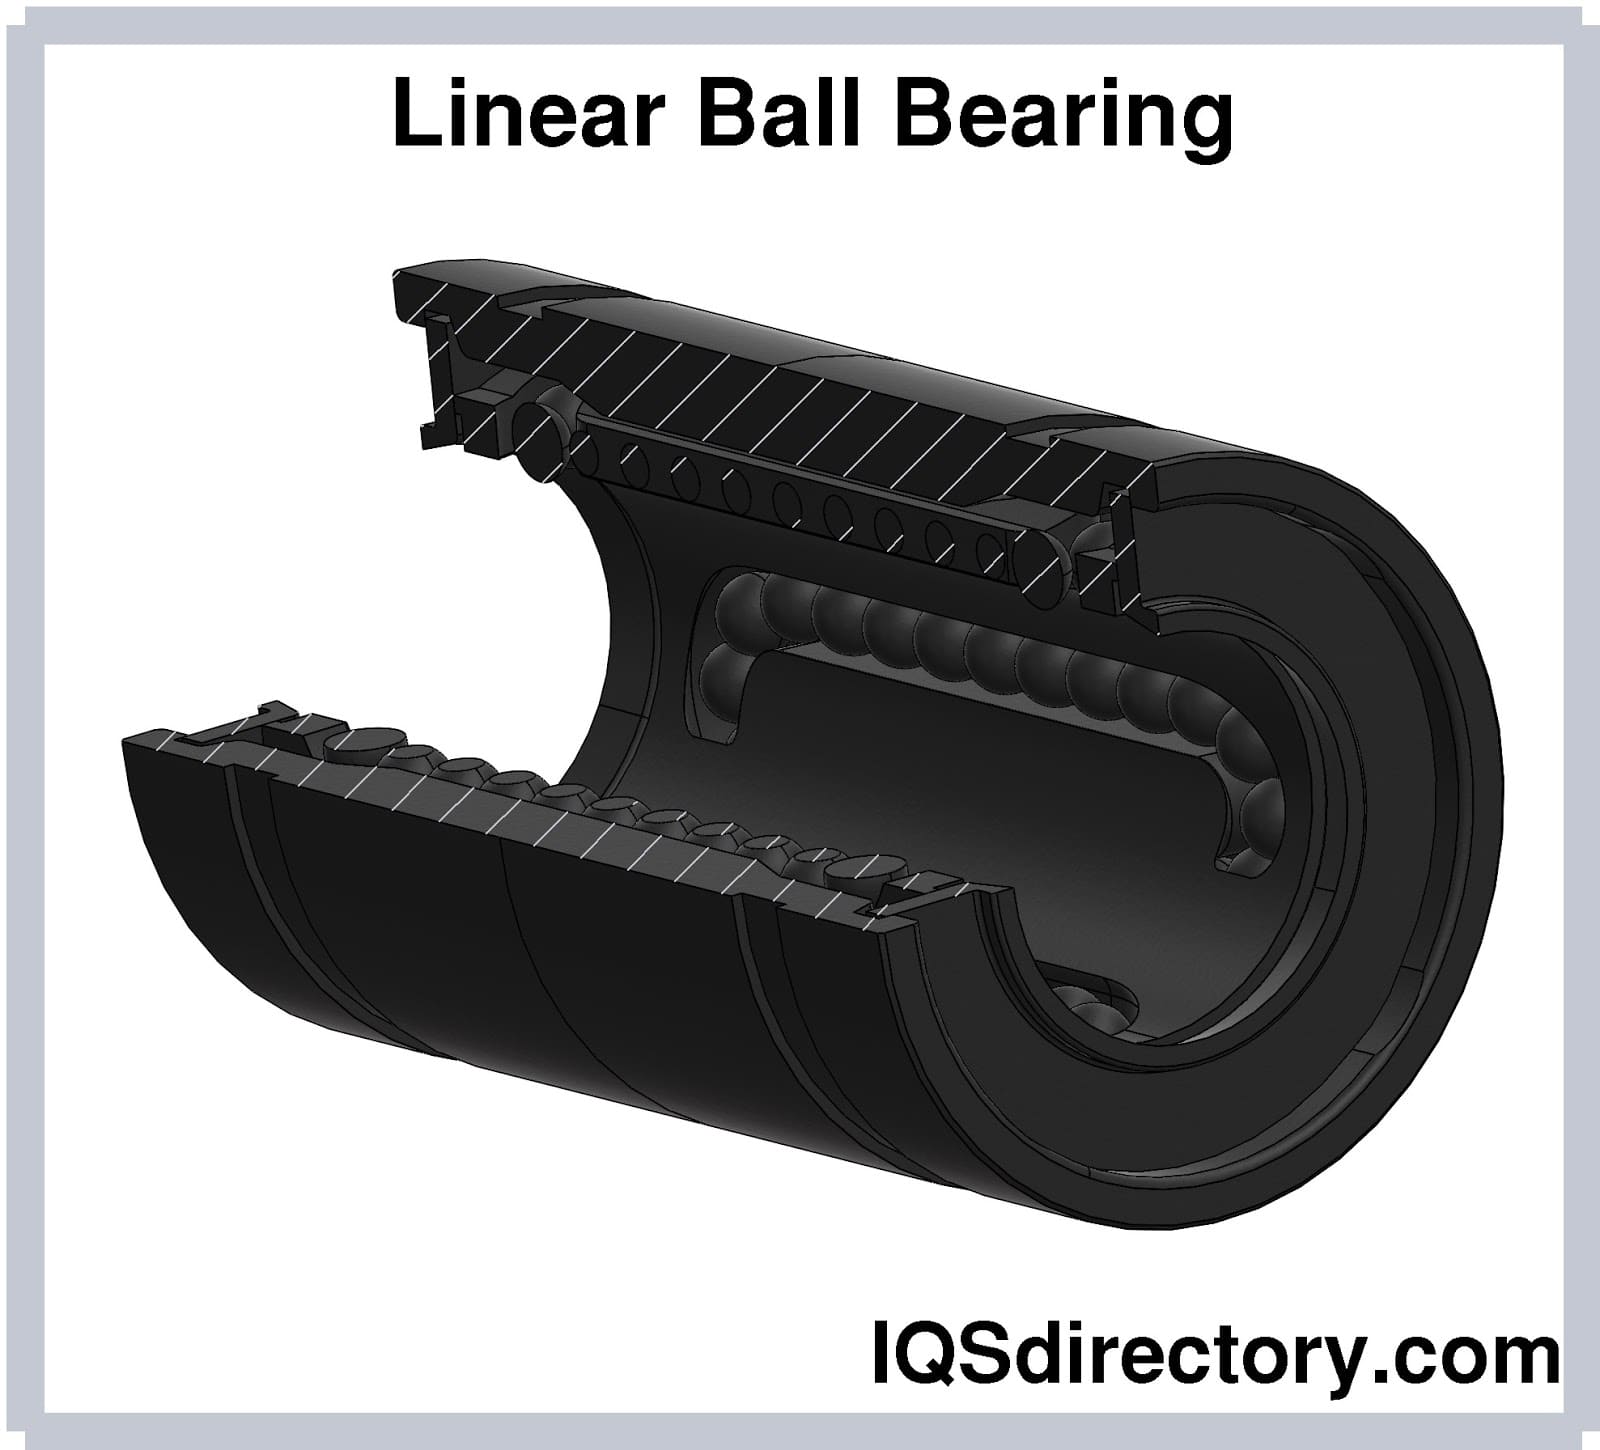 Linear Ball Bearing